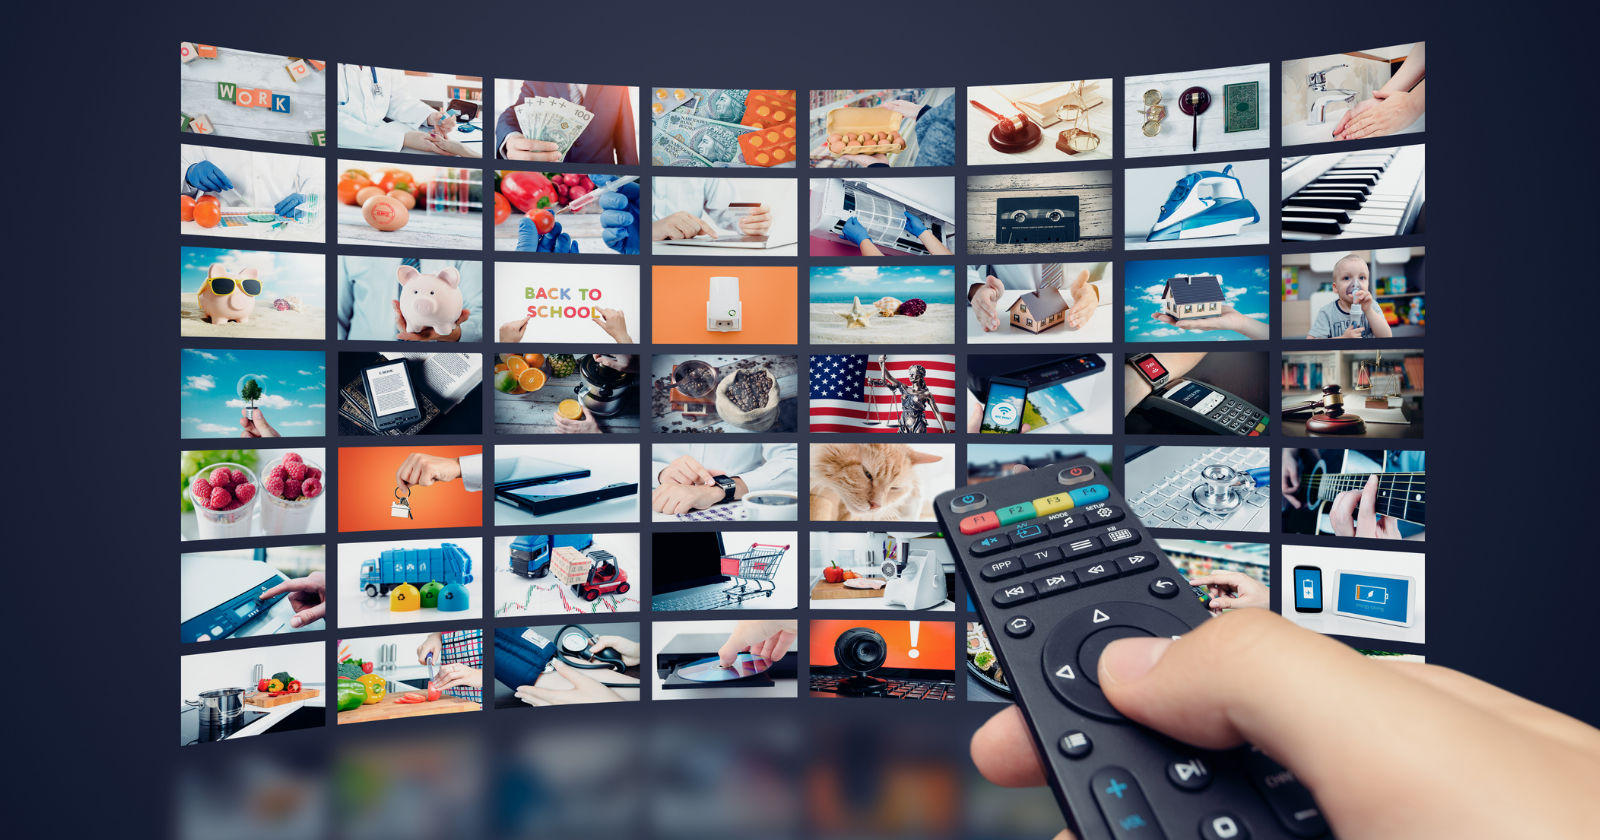 Top 10 Online Video-Streaming Platforms of 2022